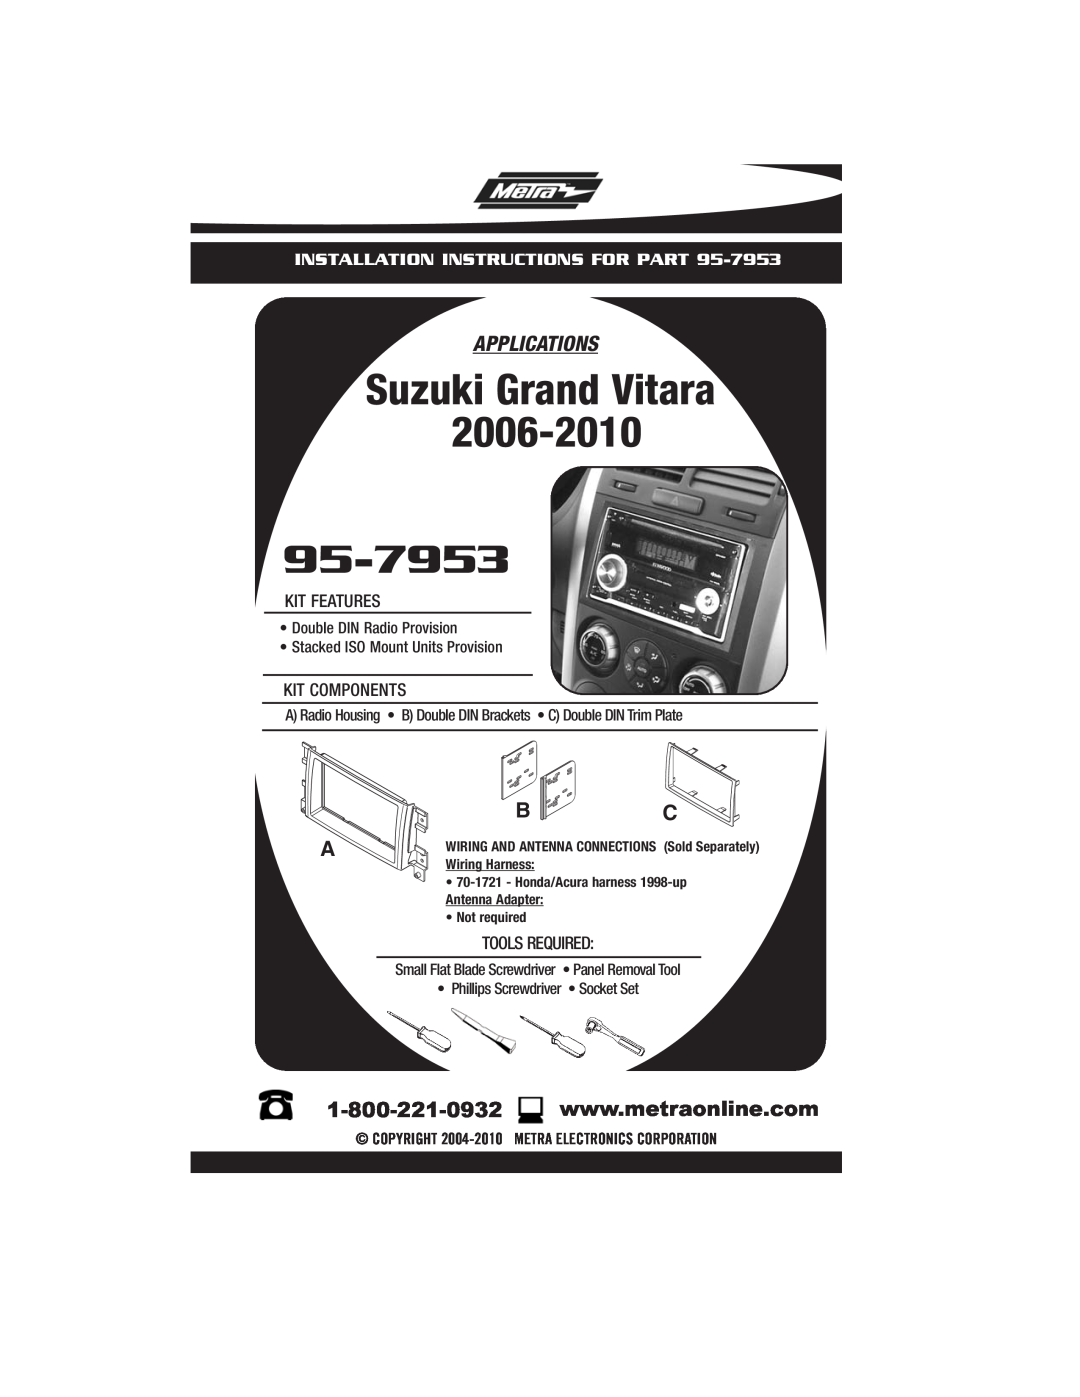 Metra Electronics 95-7953 installation instructions Suzuki Grand Vitara, Applications, Installation Instructions For Part 